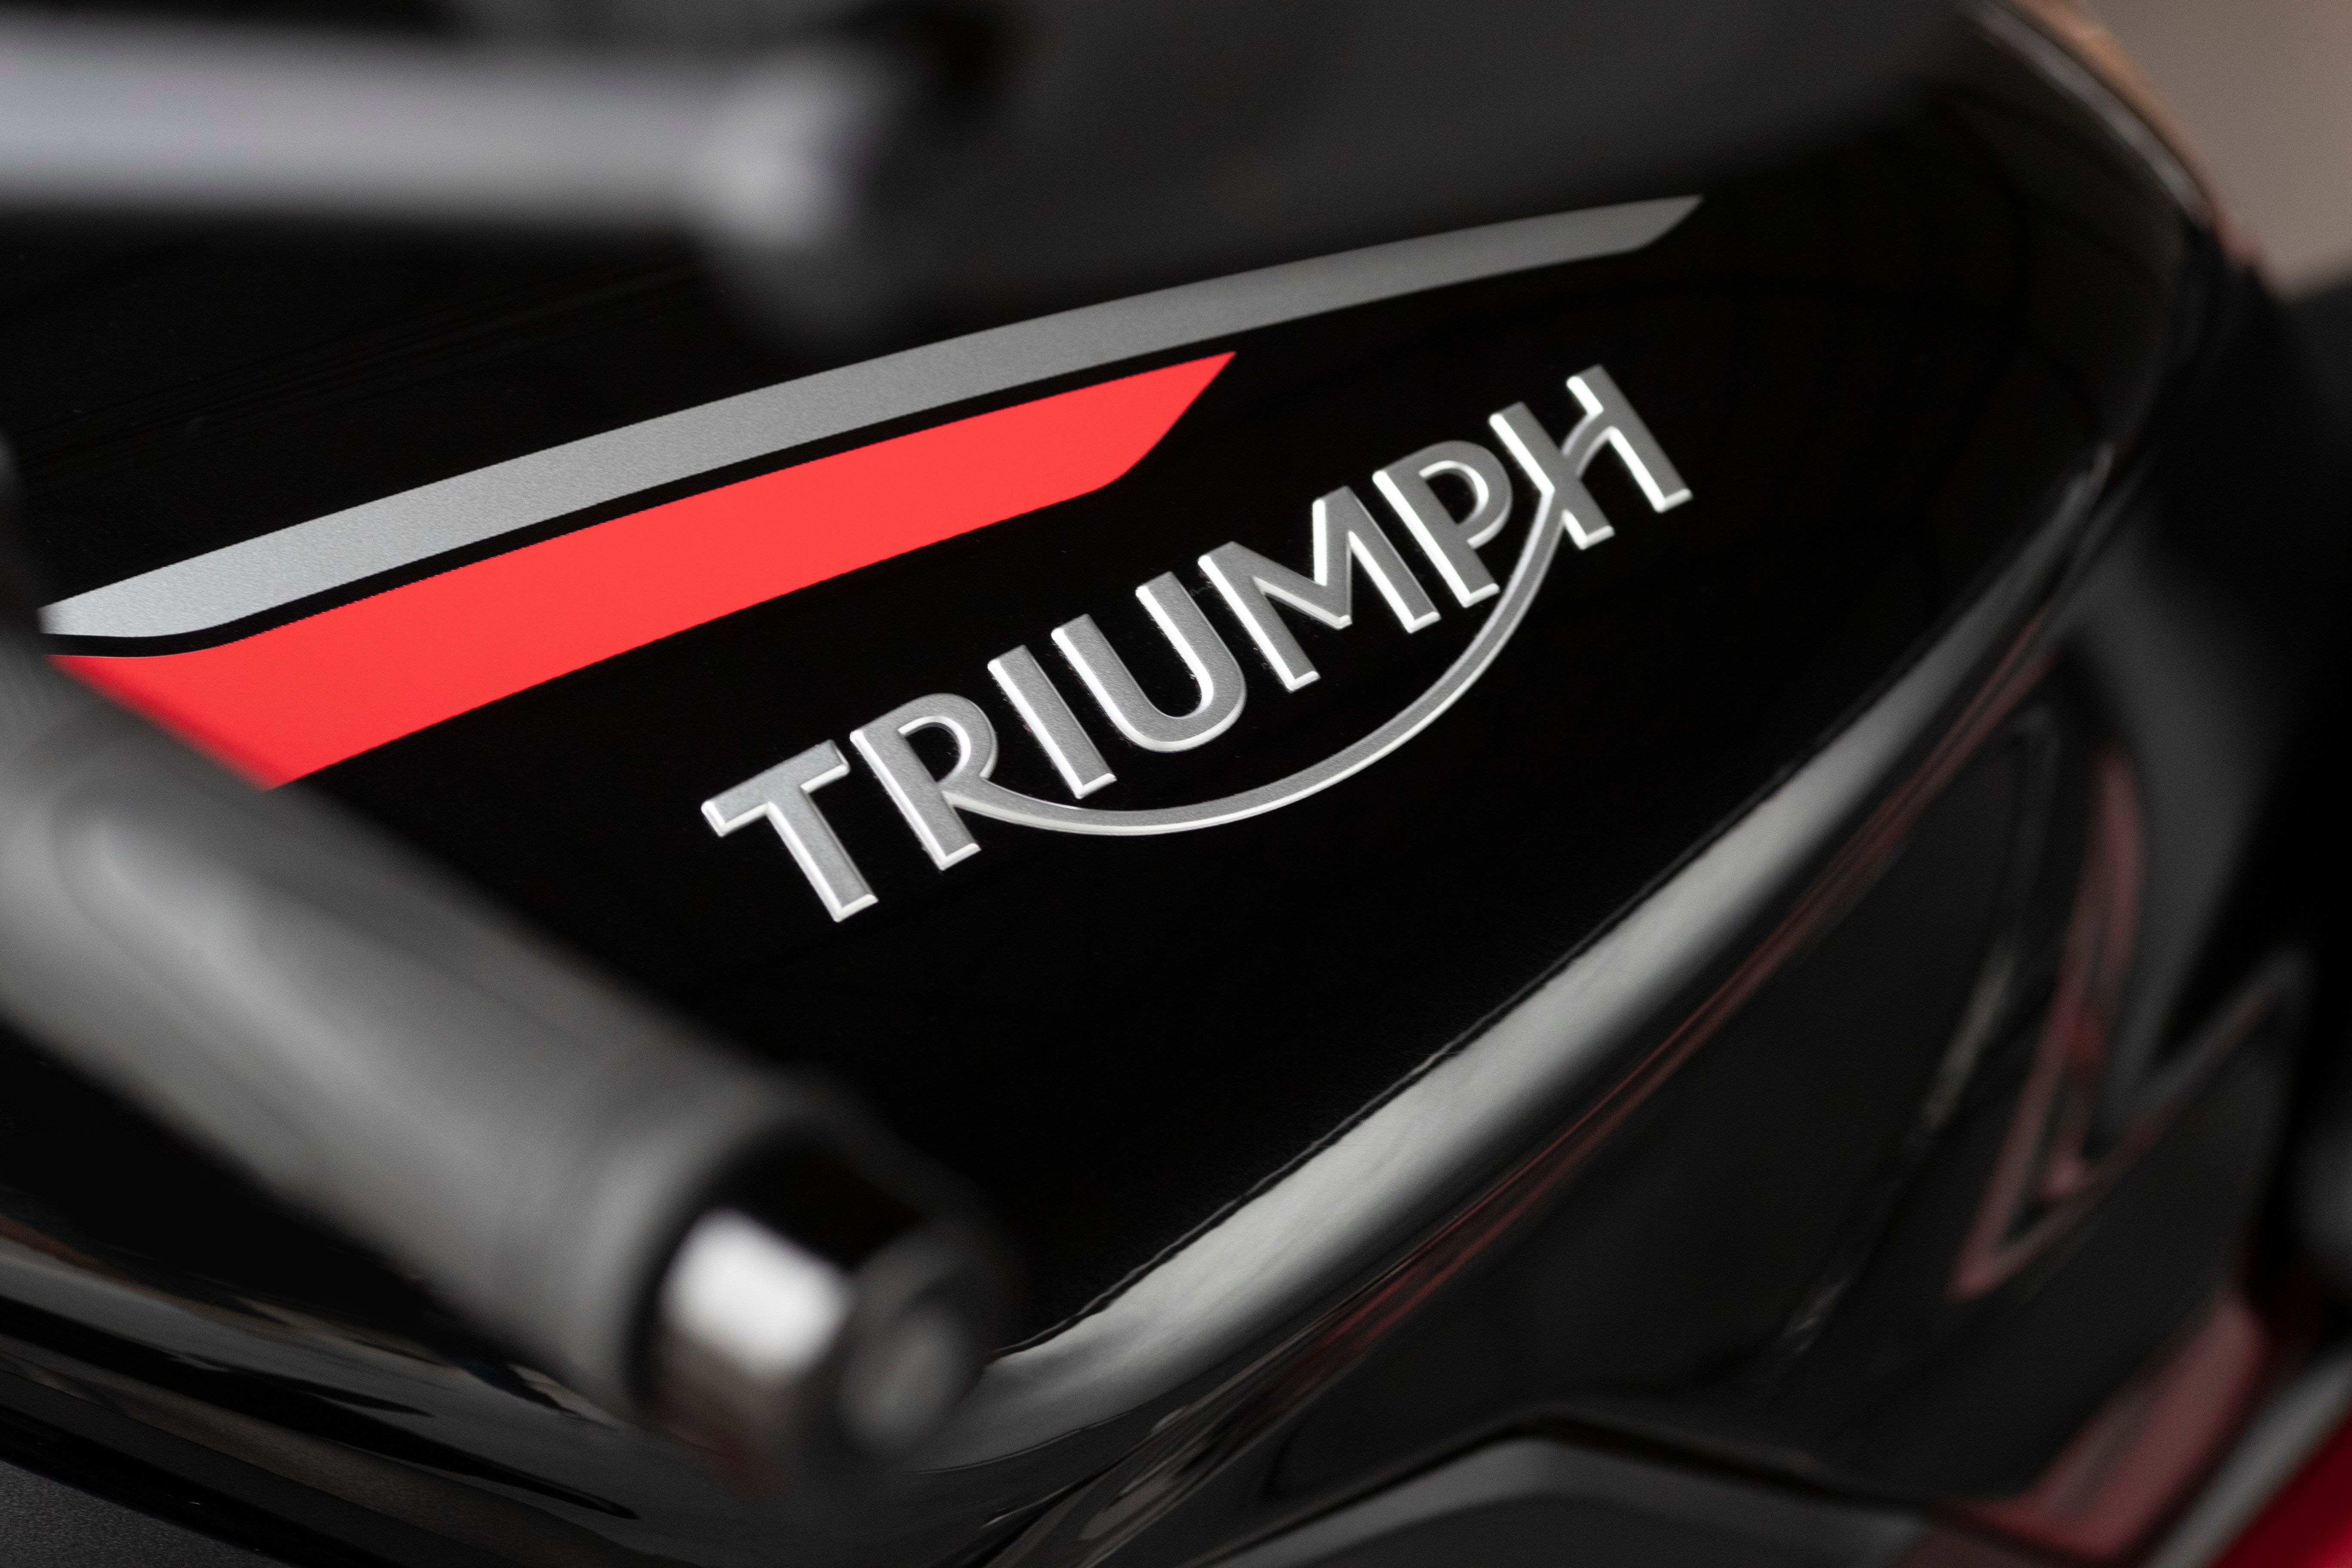 2020 - 2022 Triumph Street Triple R